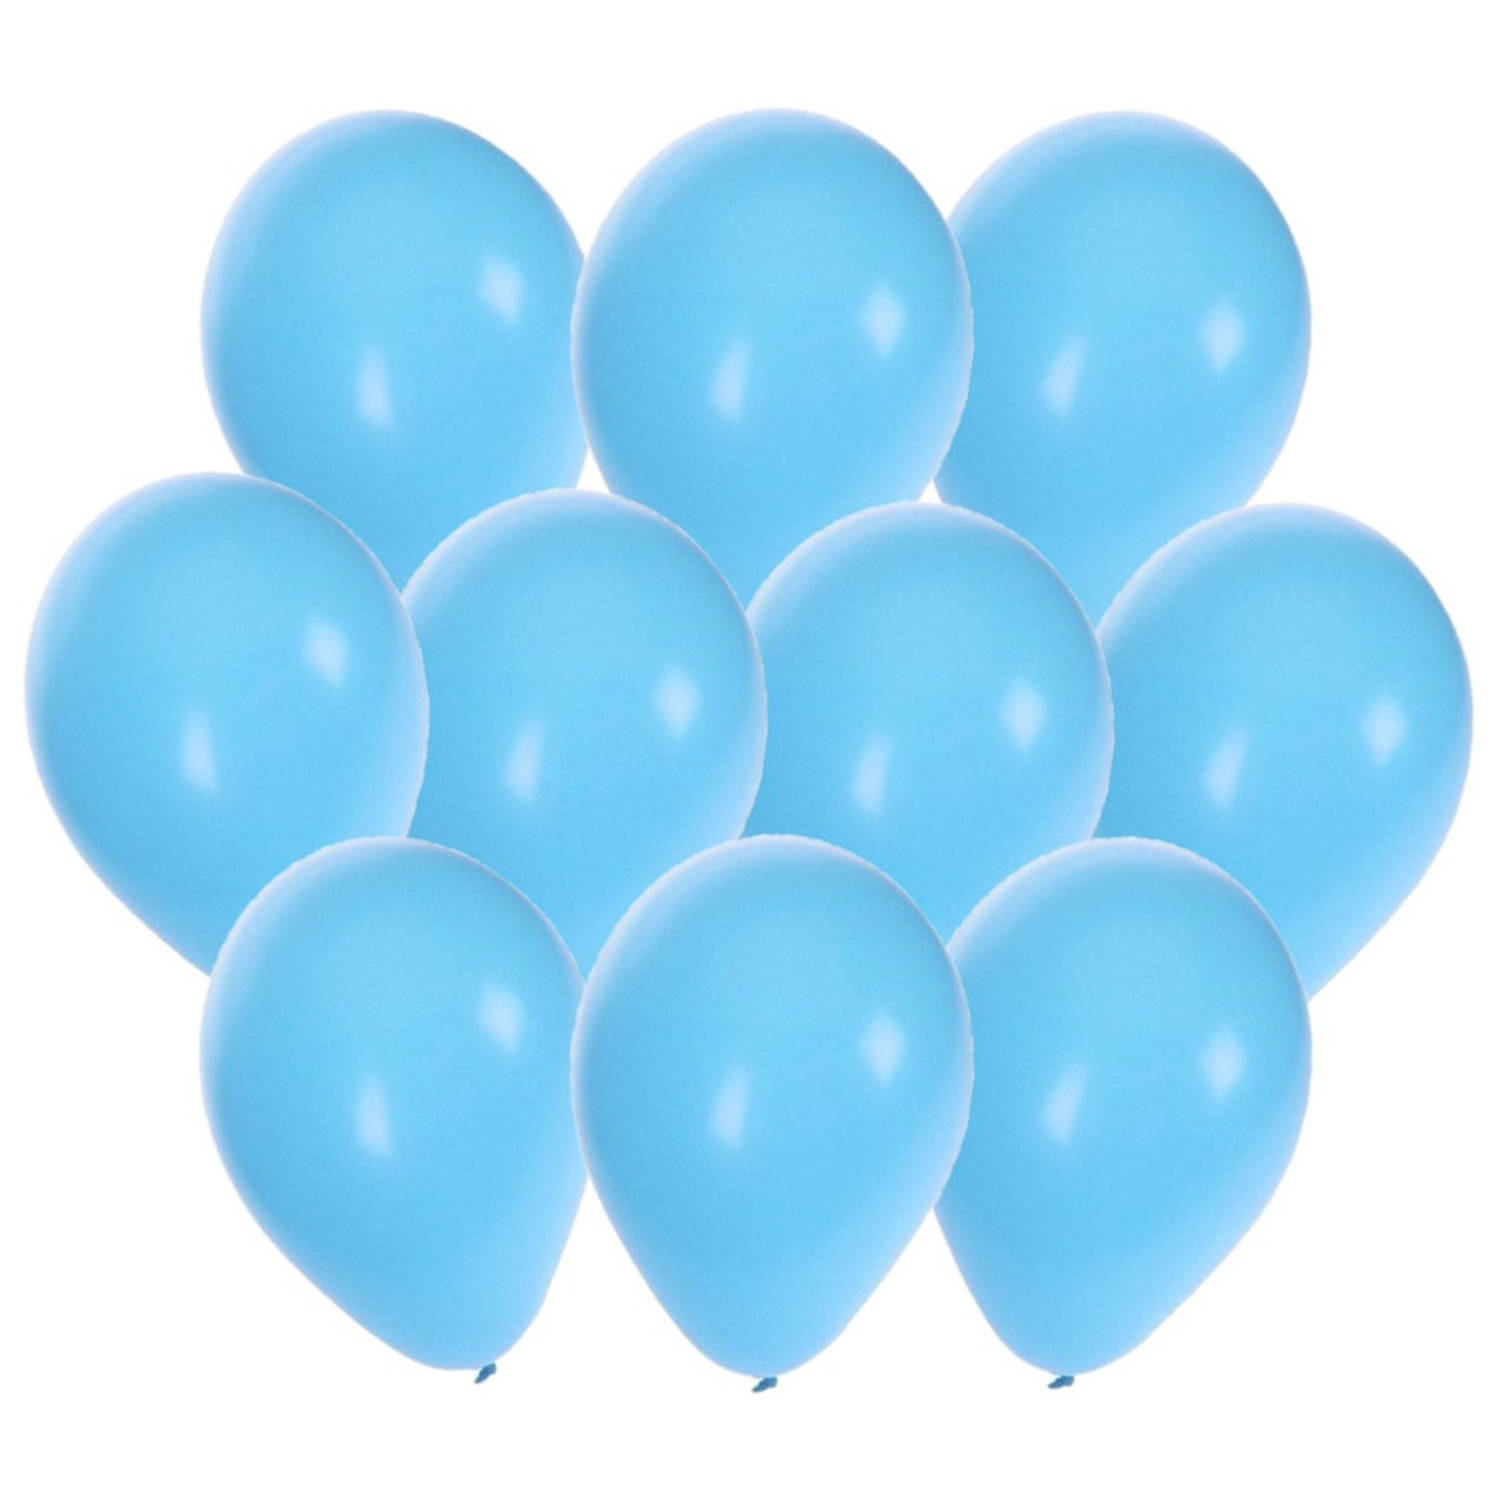 Lichtblauwe party ballonnen 30x stuks 27 cm - Ballonnen